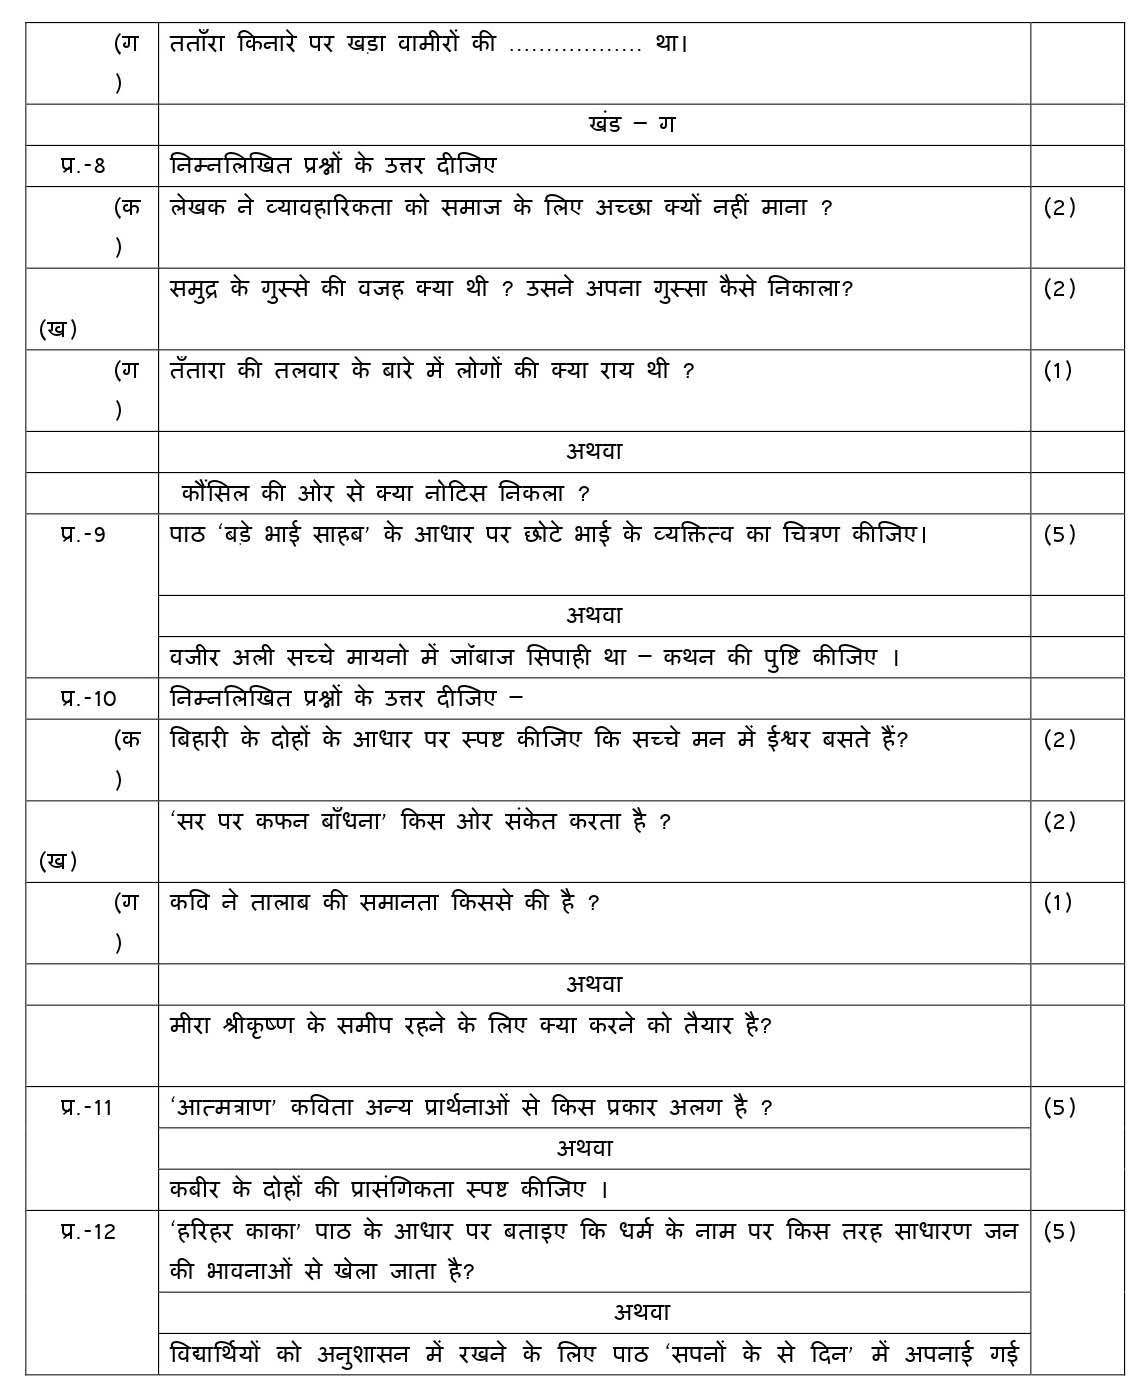 Hindi B CBSE Class X Sample Question Paper 2018-19 - Image 4